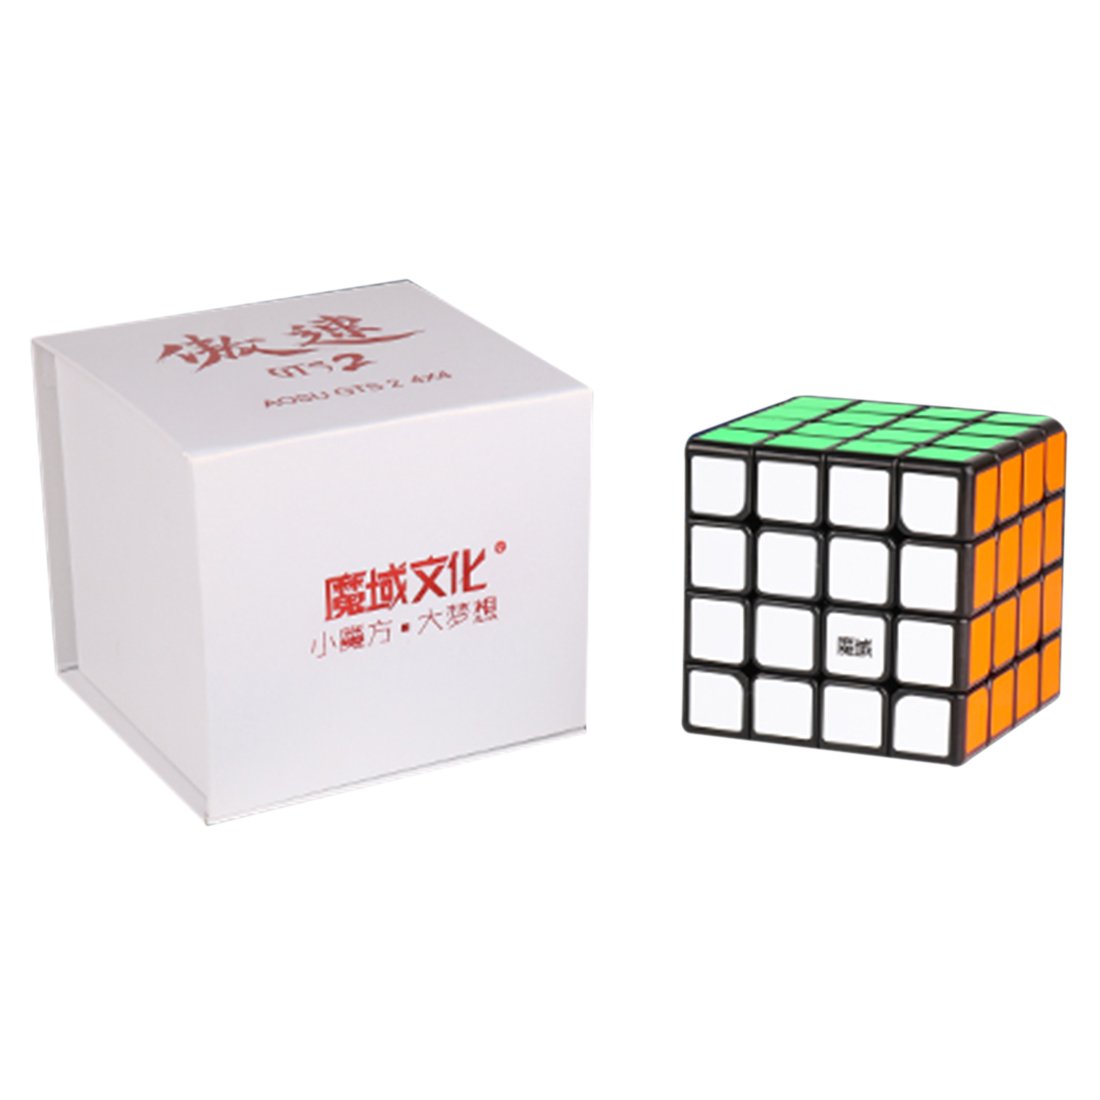 Yj8267 Moyu Aosu Gts2 Magic Cube 4X4 Black